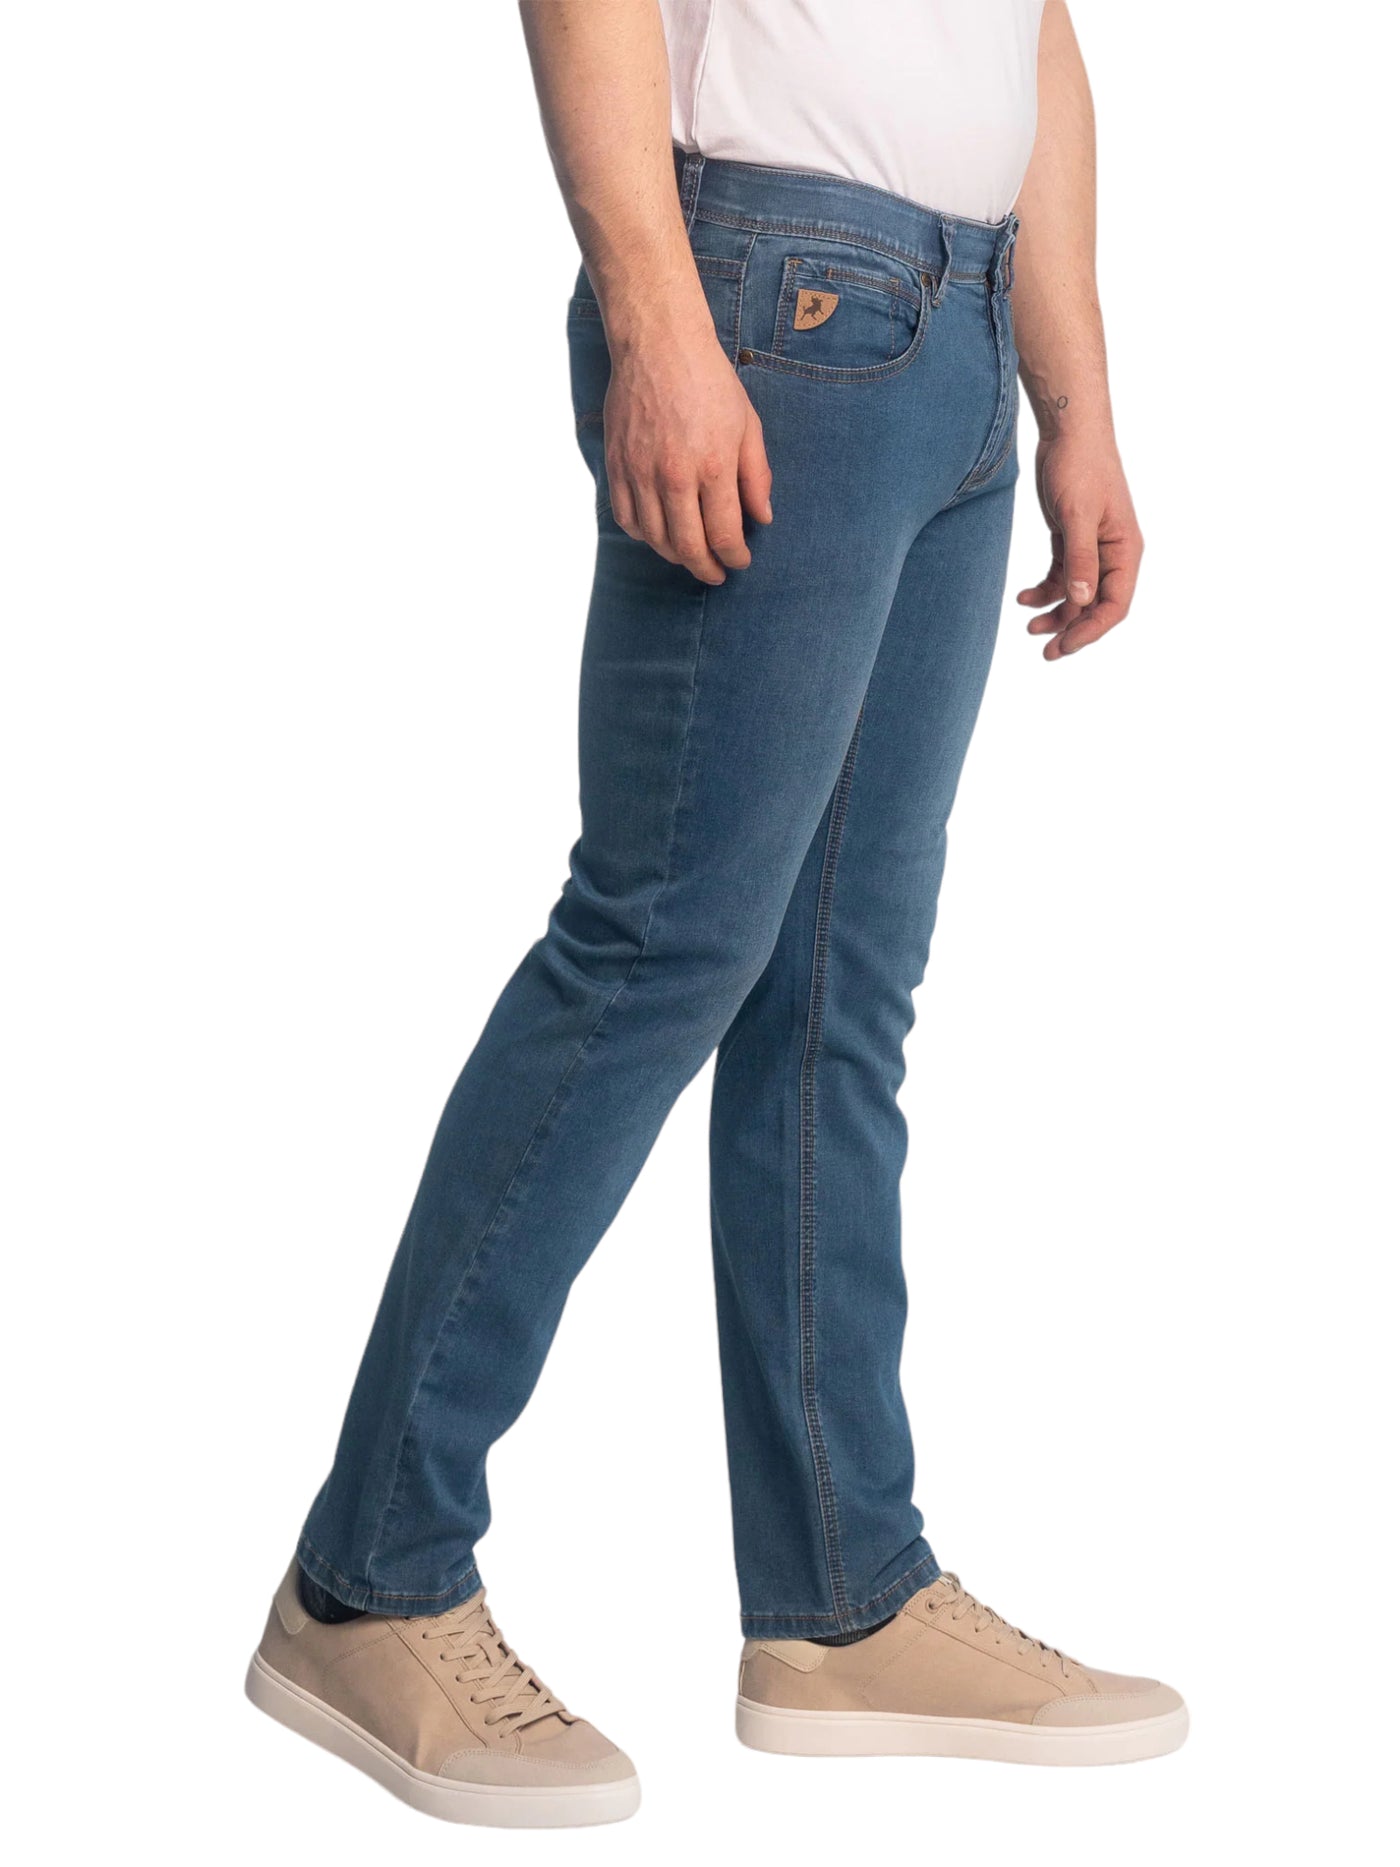 Jeans bleu moyen coupe semi-ajustée